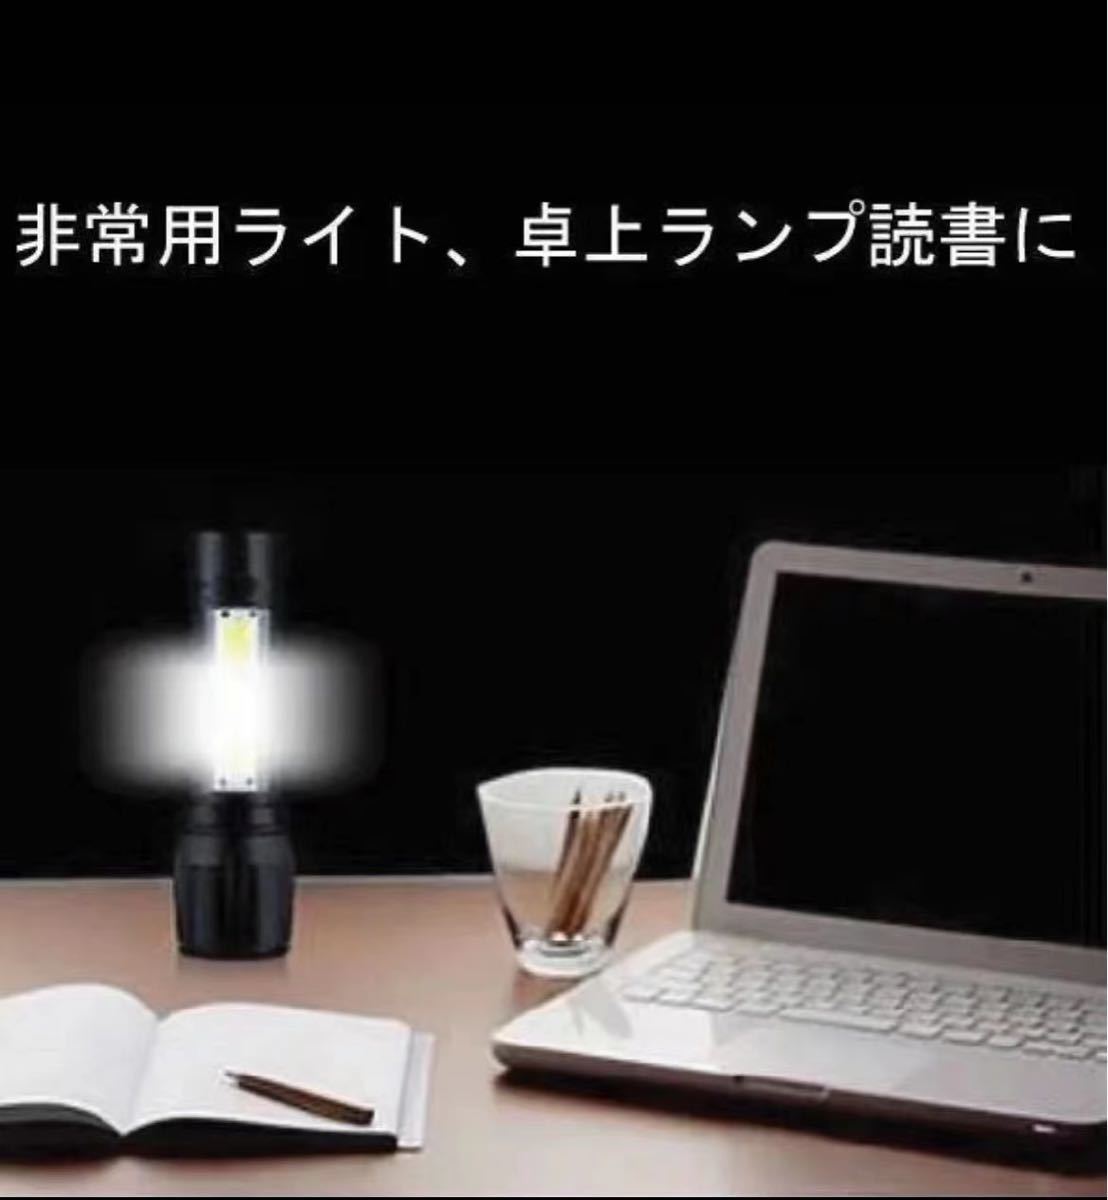 LED ライト ペンライト 懐中電灯 小型 強力 USB 充電式 停電 防災 COB